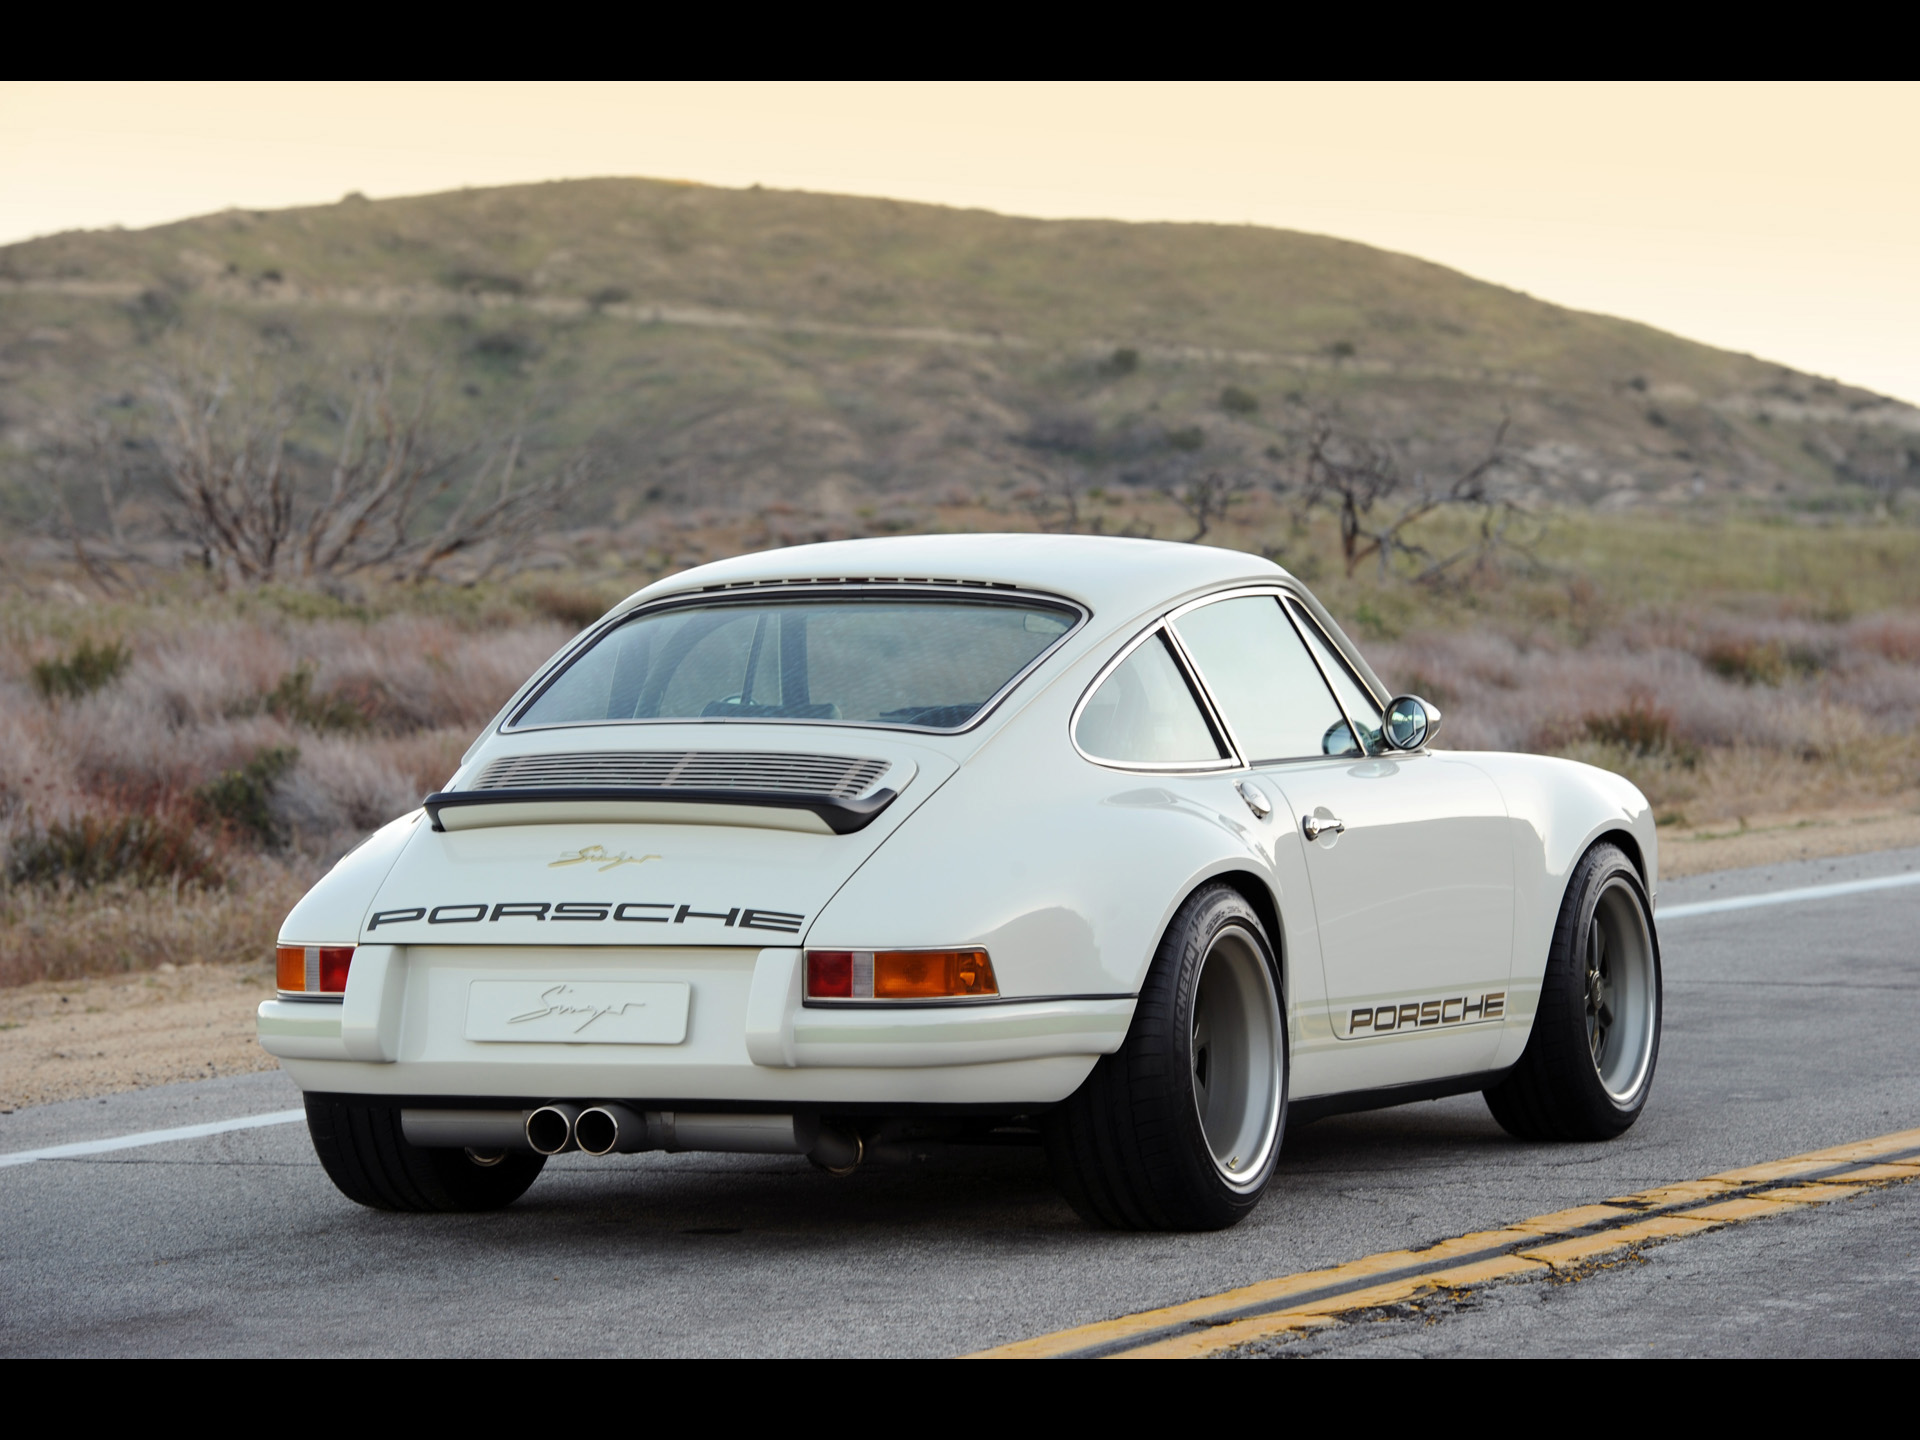 Singer Porsche White Rear Angle Wallpaper